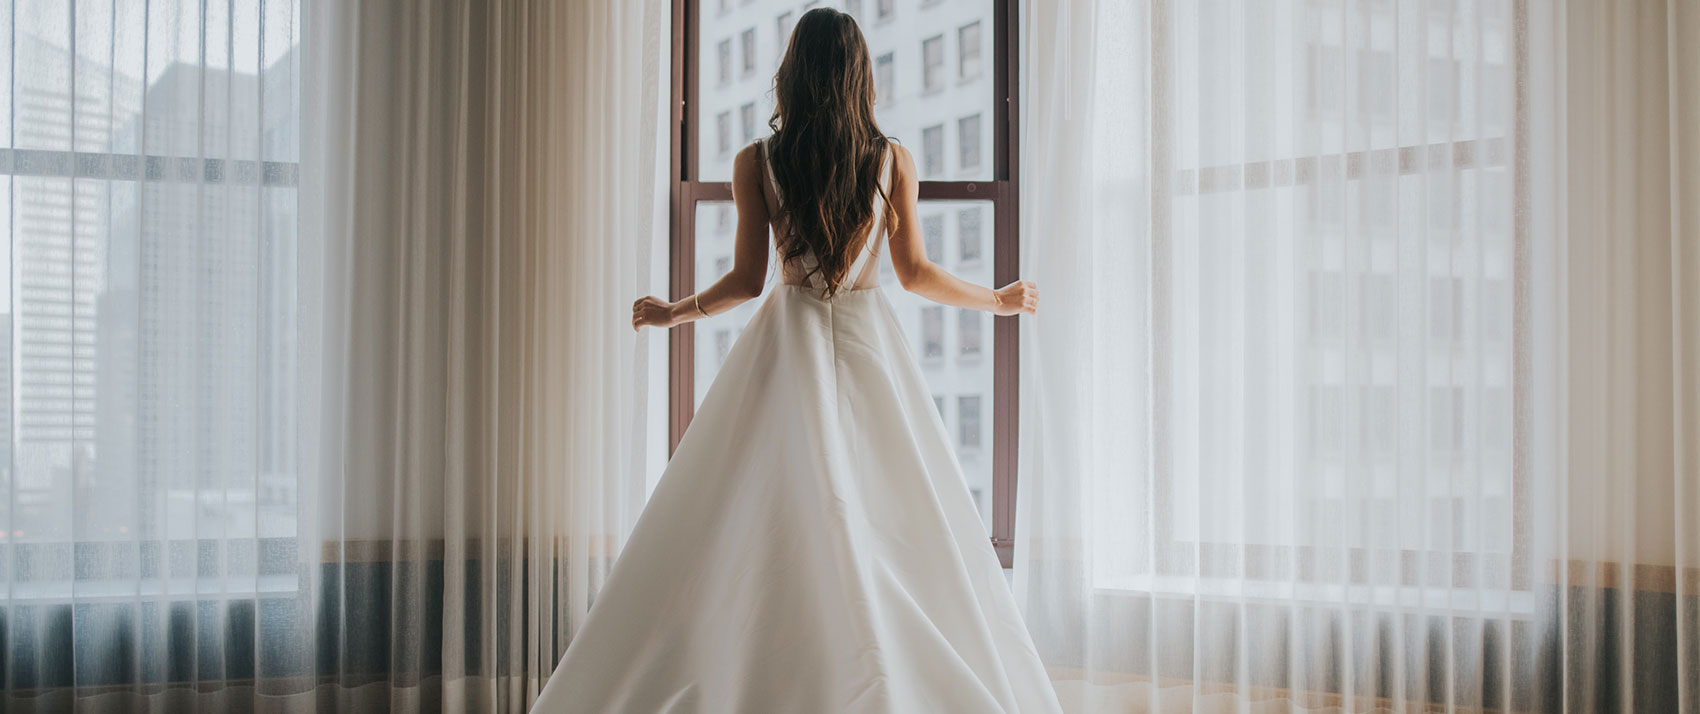 bride standing at window overlooking downtown